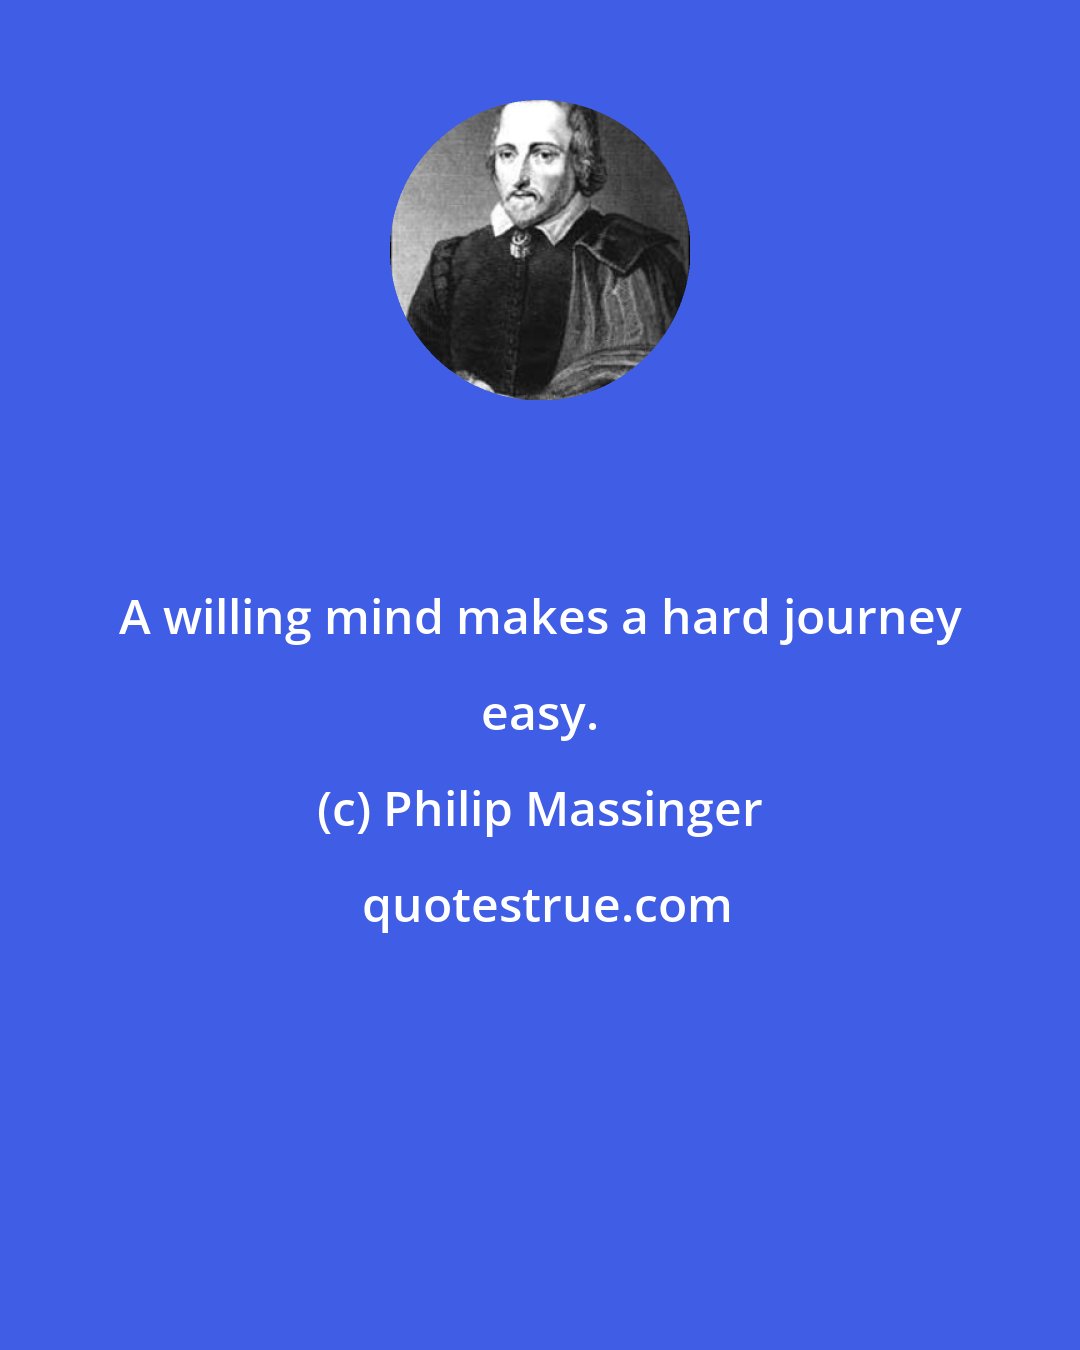 Philip Massinger: A willing mind makes a hard journey easy.